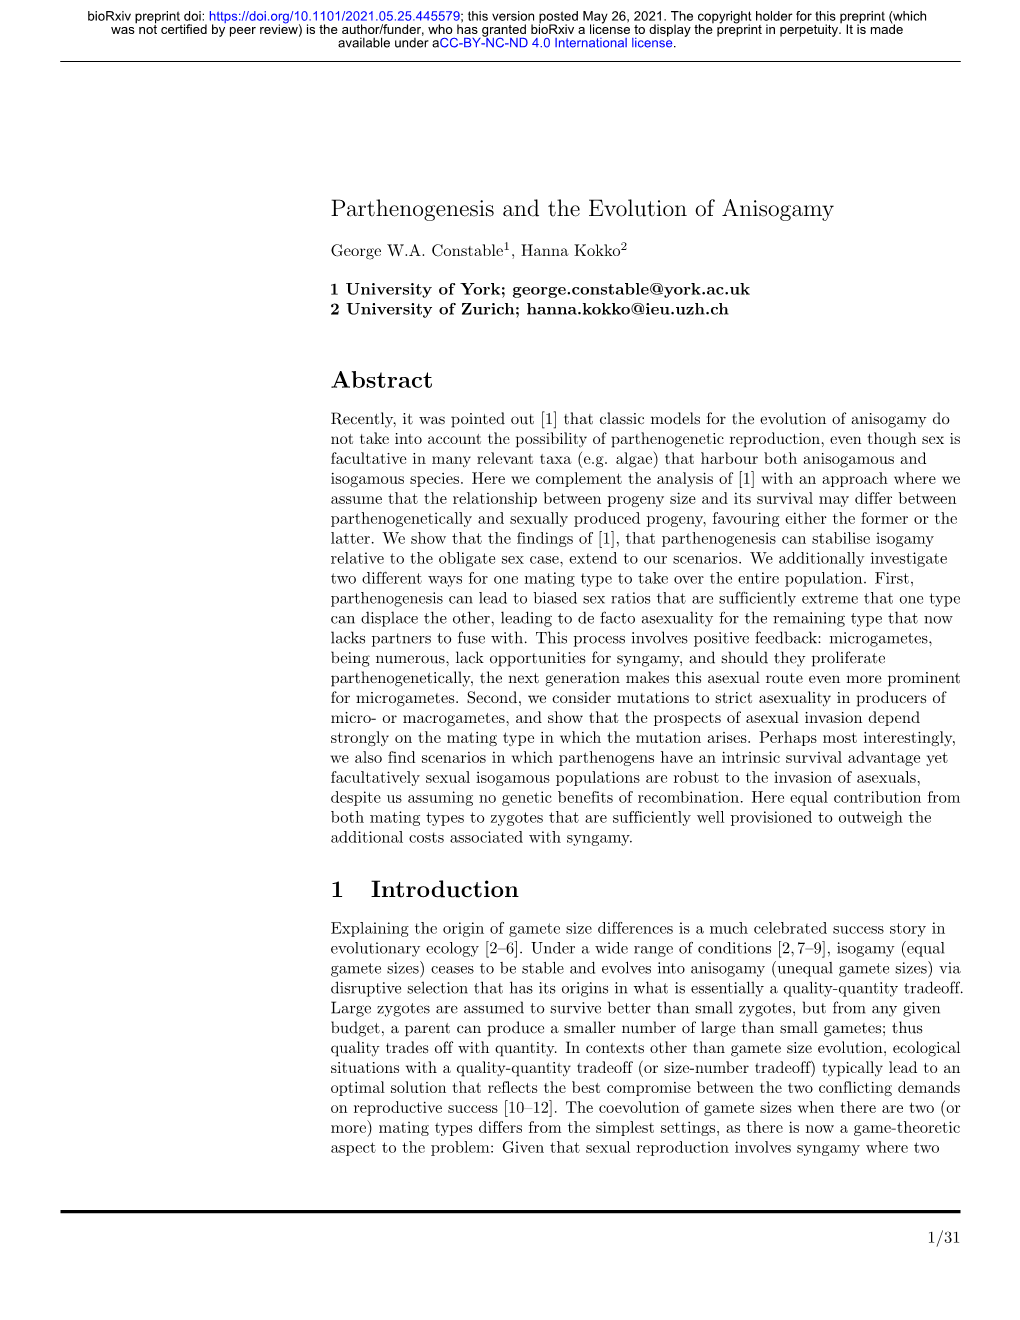 Parthenogenesis and the Evolution of Anisogamy